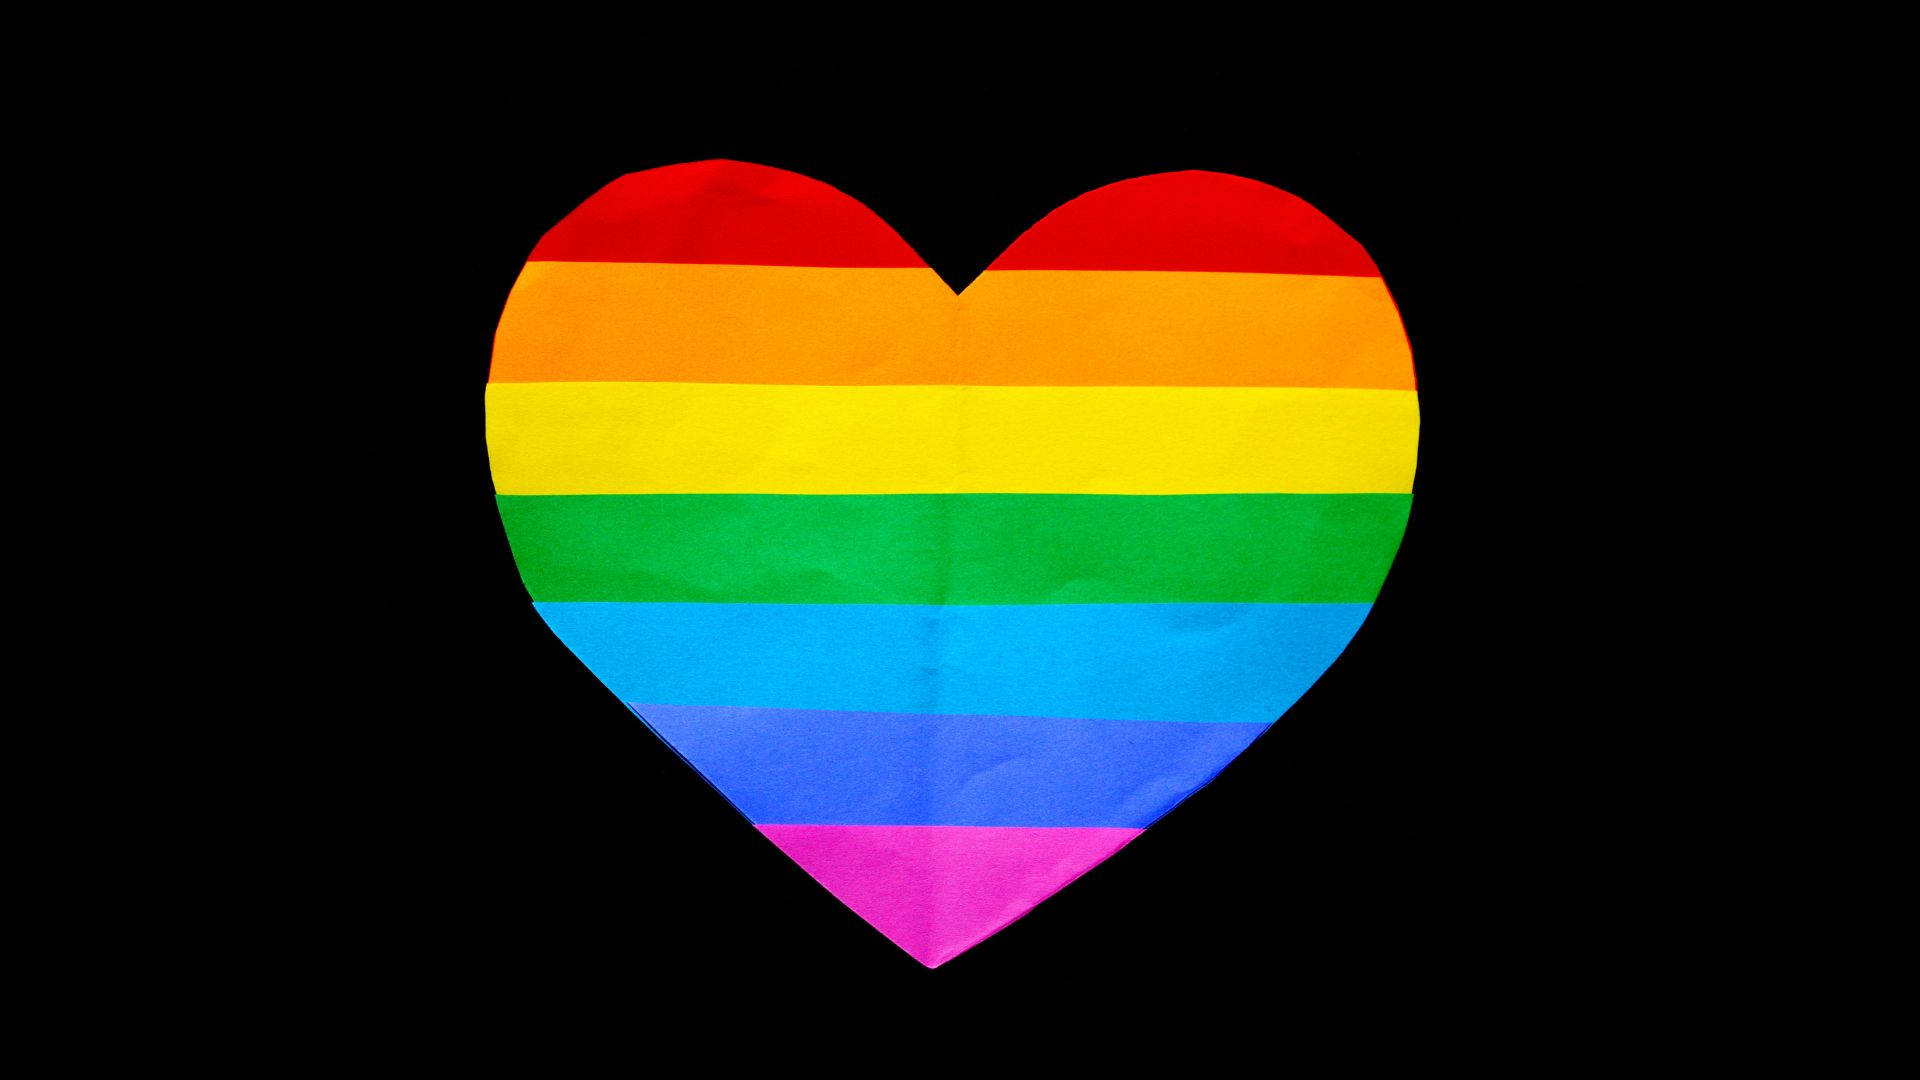 Celebrate diversity in pride with subtle LGBT symbols Wallpaper